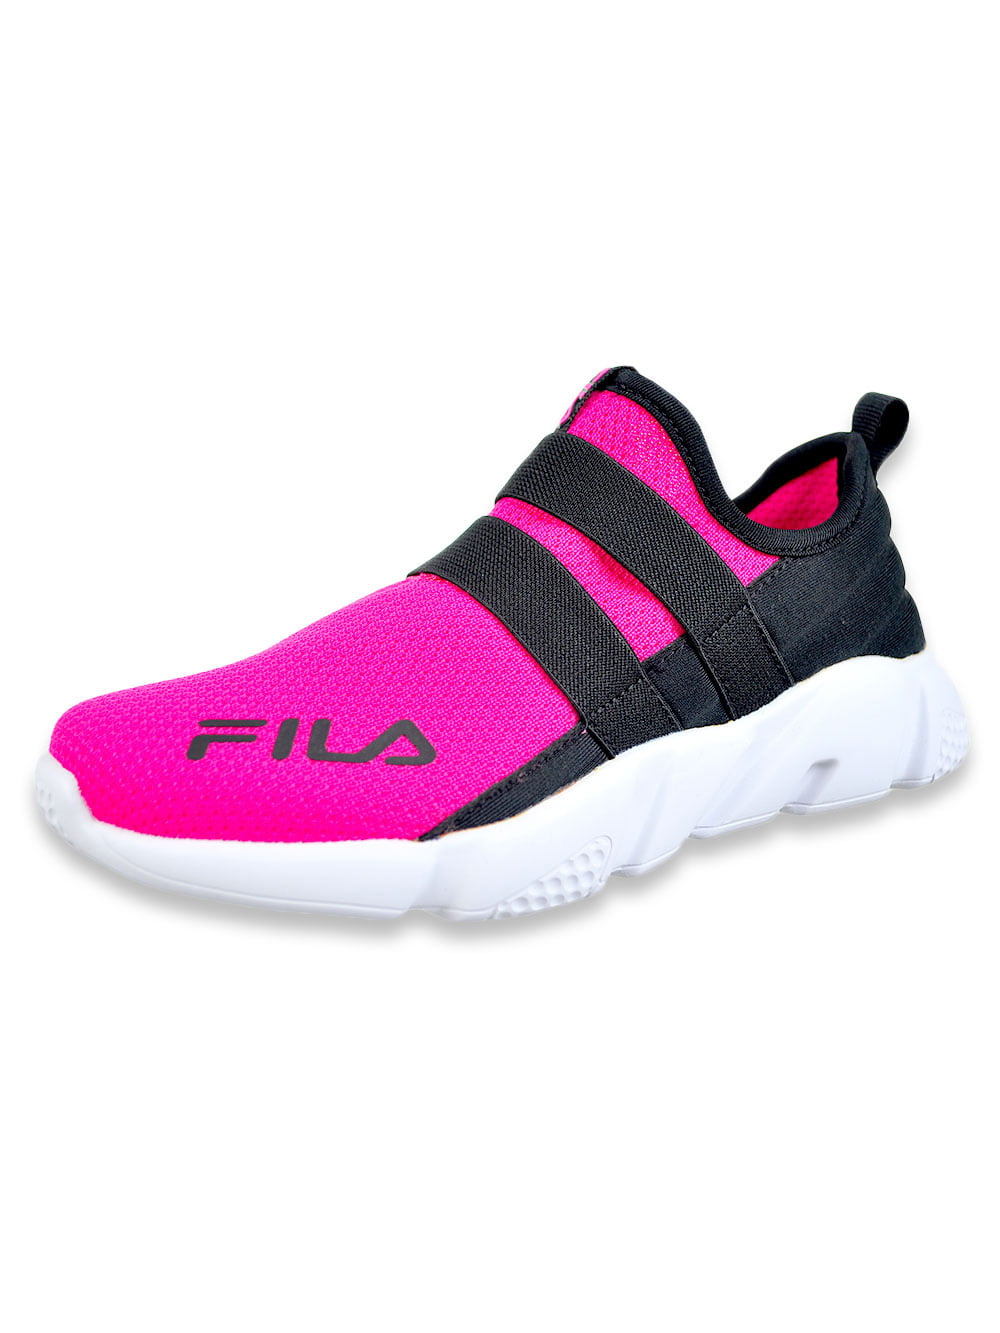 Fila Girls' Decryption Sock Running Sneakers (Sizes - 5) pink/multi, 12 toddler - Walmart.com